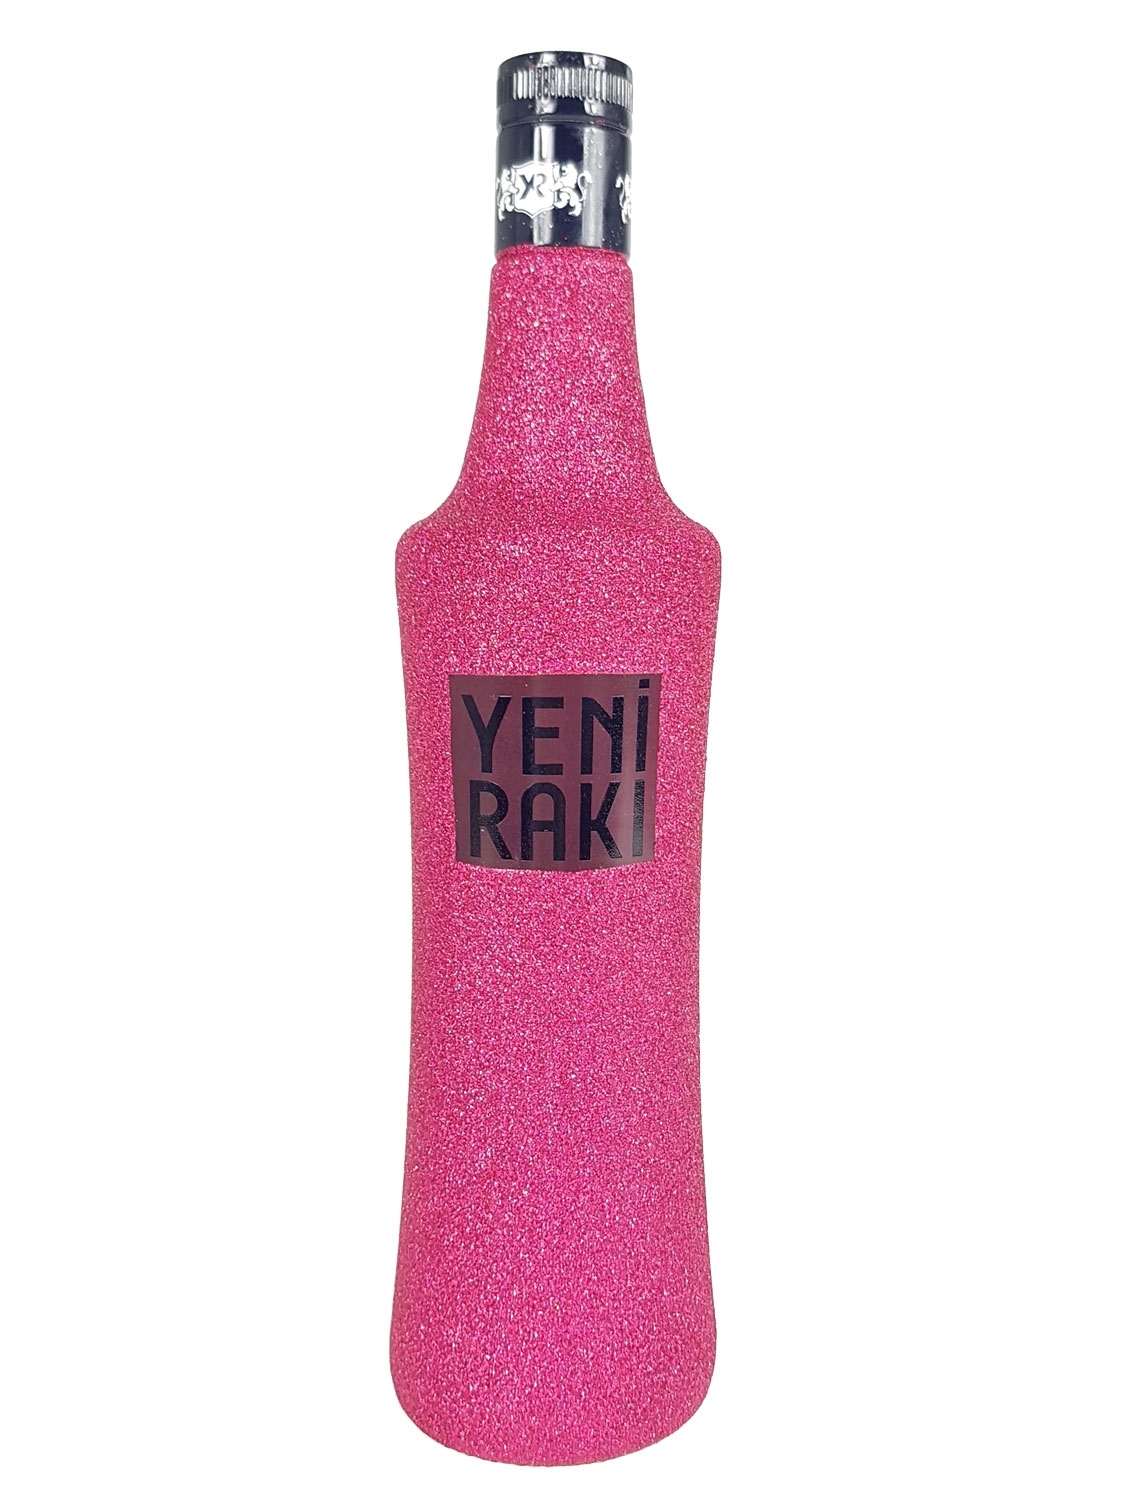 Yeni Raki 0,7l 700ml (45% Vol) Bling Bling Glitzerflasche in hot pink -[Enthält Sulfite]